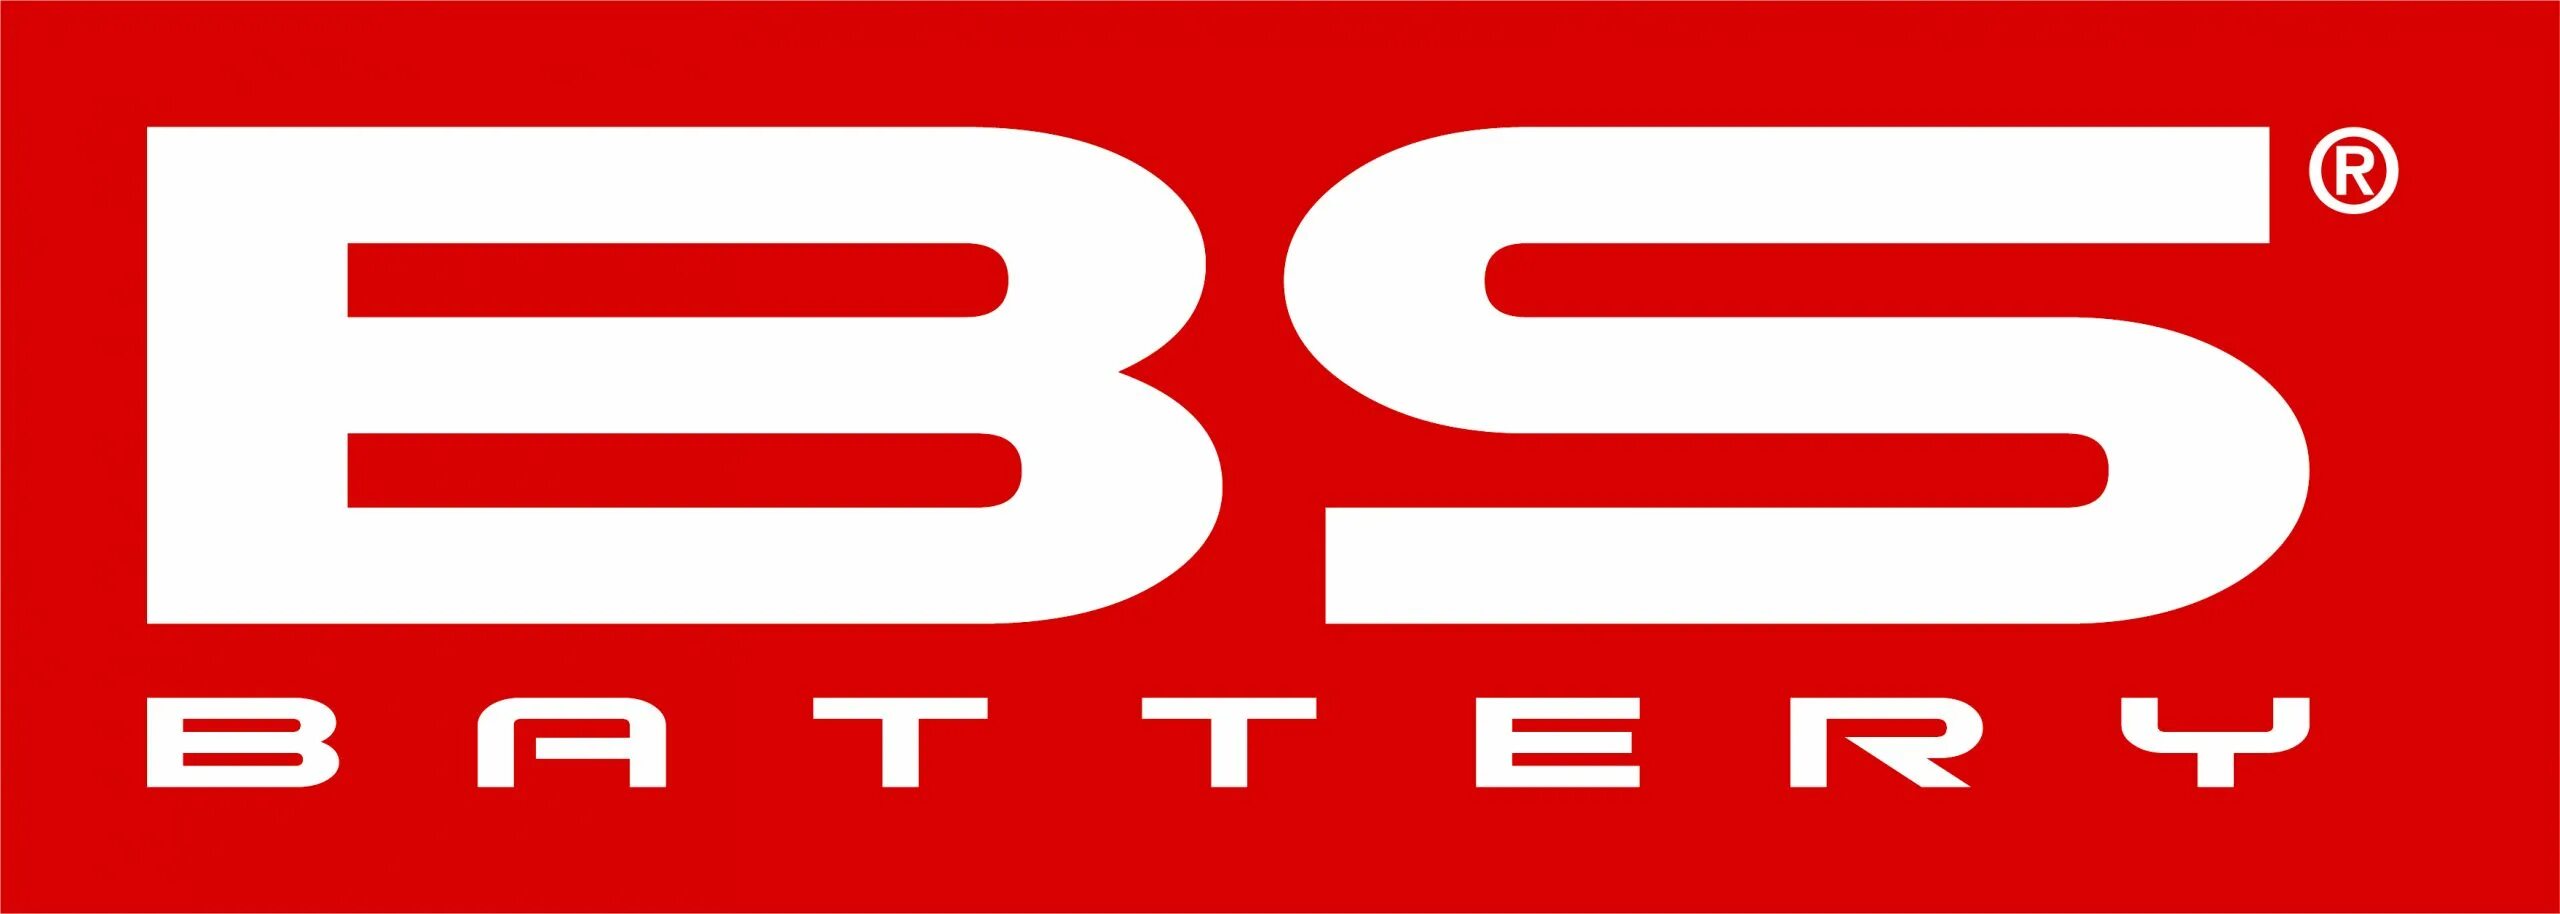 Bs battery. Battery логотип. BS логотип. Brest Battery лого.